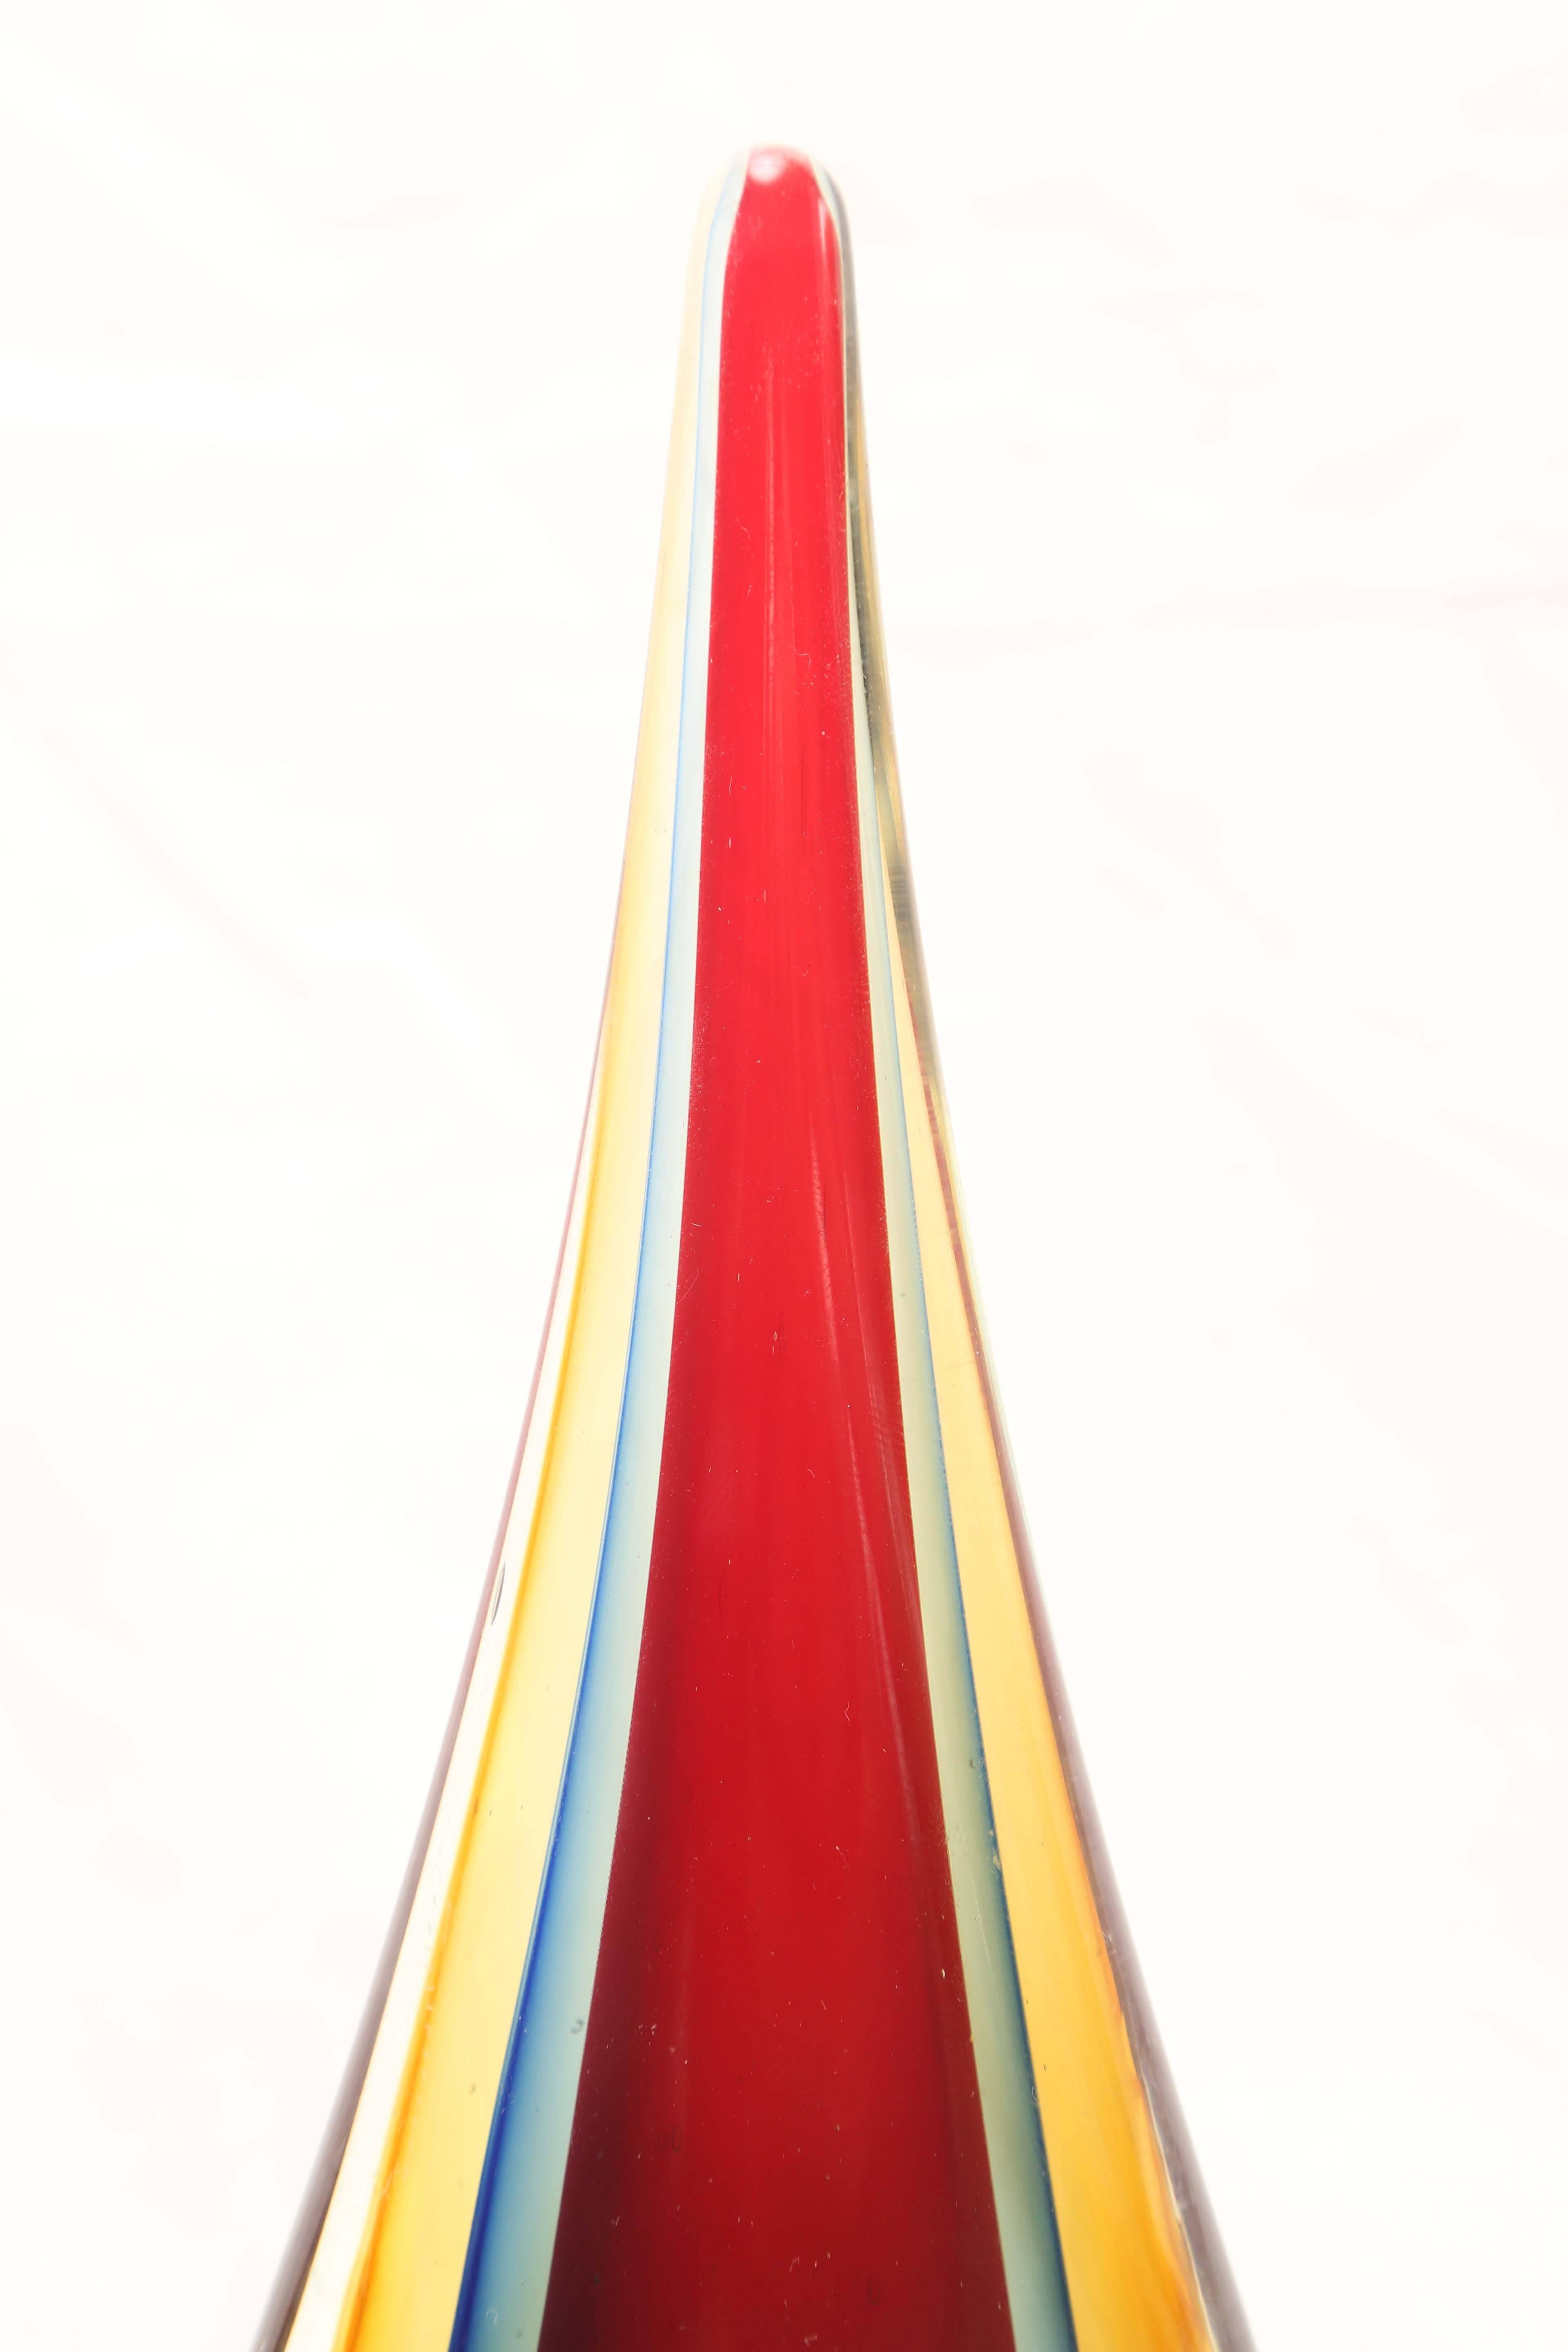 Mid-Century Modern style of Flávio Poli Glass Teardrop Sculpture Murano In Good Condition For Sale In Miami, FL